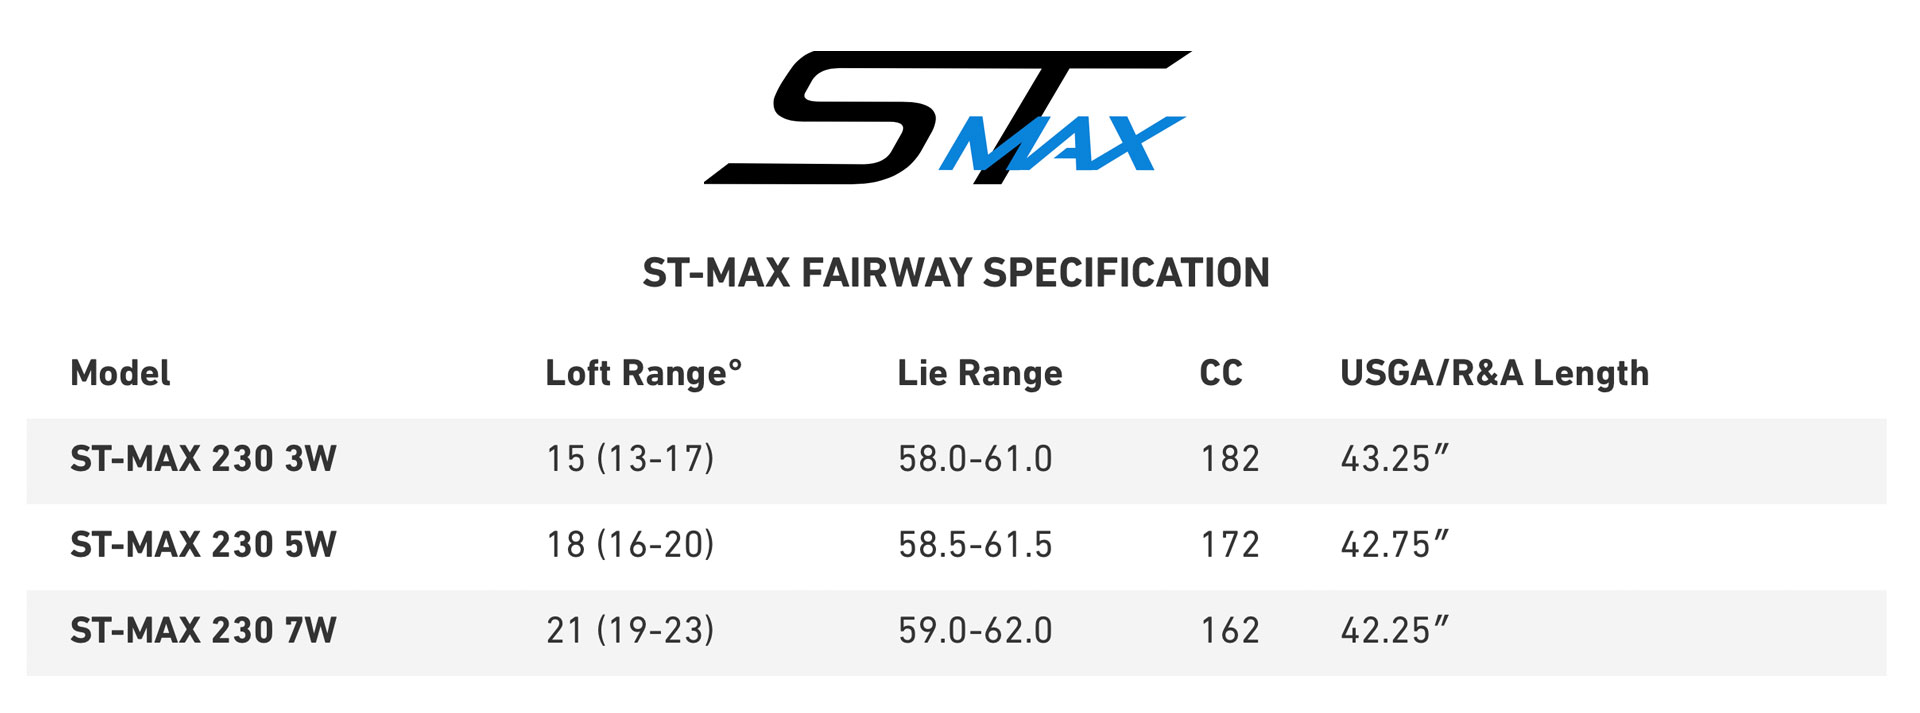 Specification for Mizuno ST-MAX 230 Fairway Woods